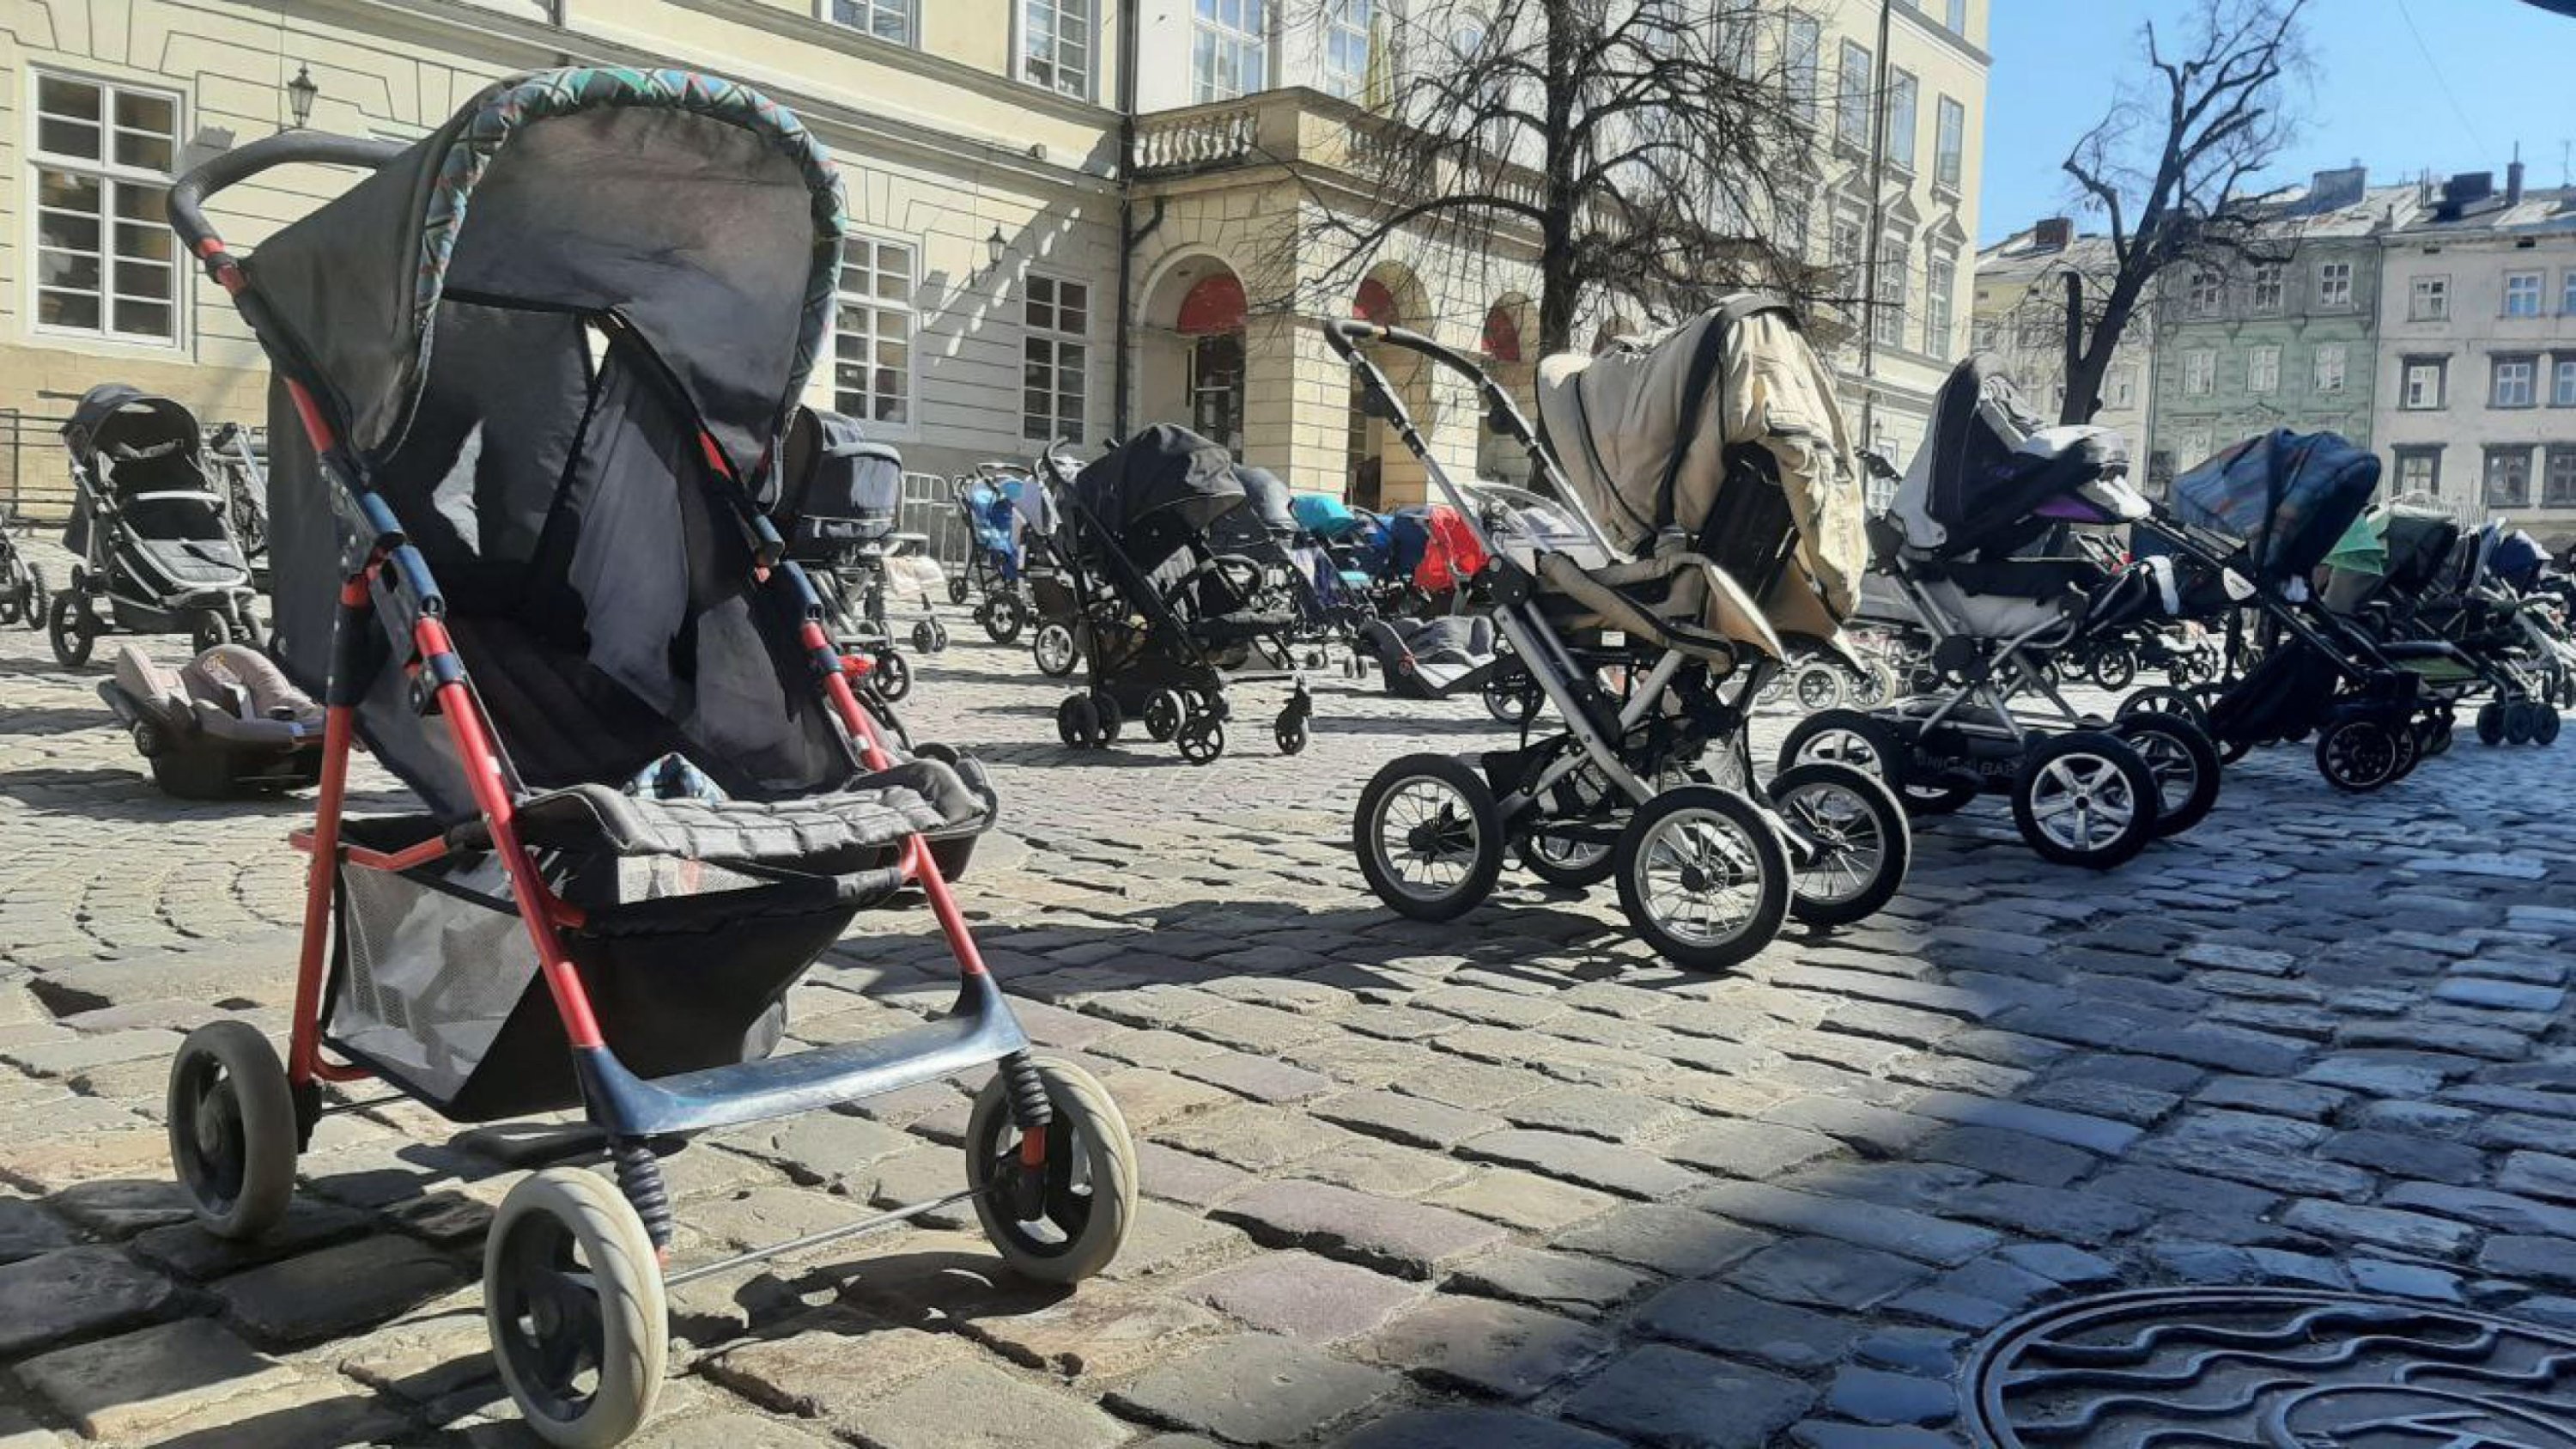 Gambar dari dekat salah satu dari 109 kereta bayi kosong yang melambangkan jumlah anak yang terbunuh sejak awal invasi Rusia ke Ukraina, ditempatkan di alun-alun pasar pusat Lviv, Ukraina, 18 Maret 2022. (EPA Photo)